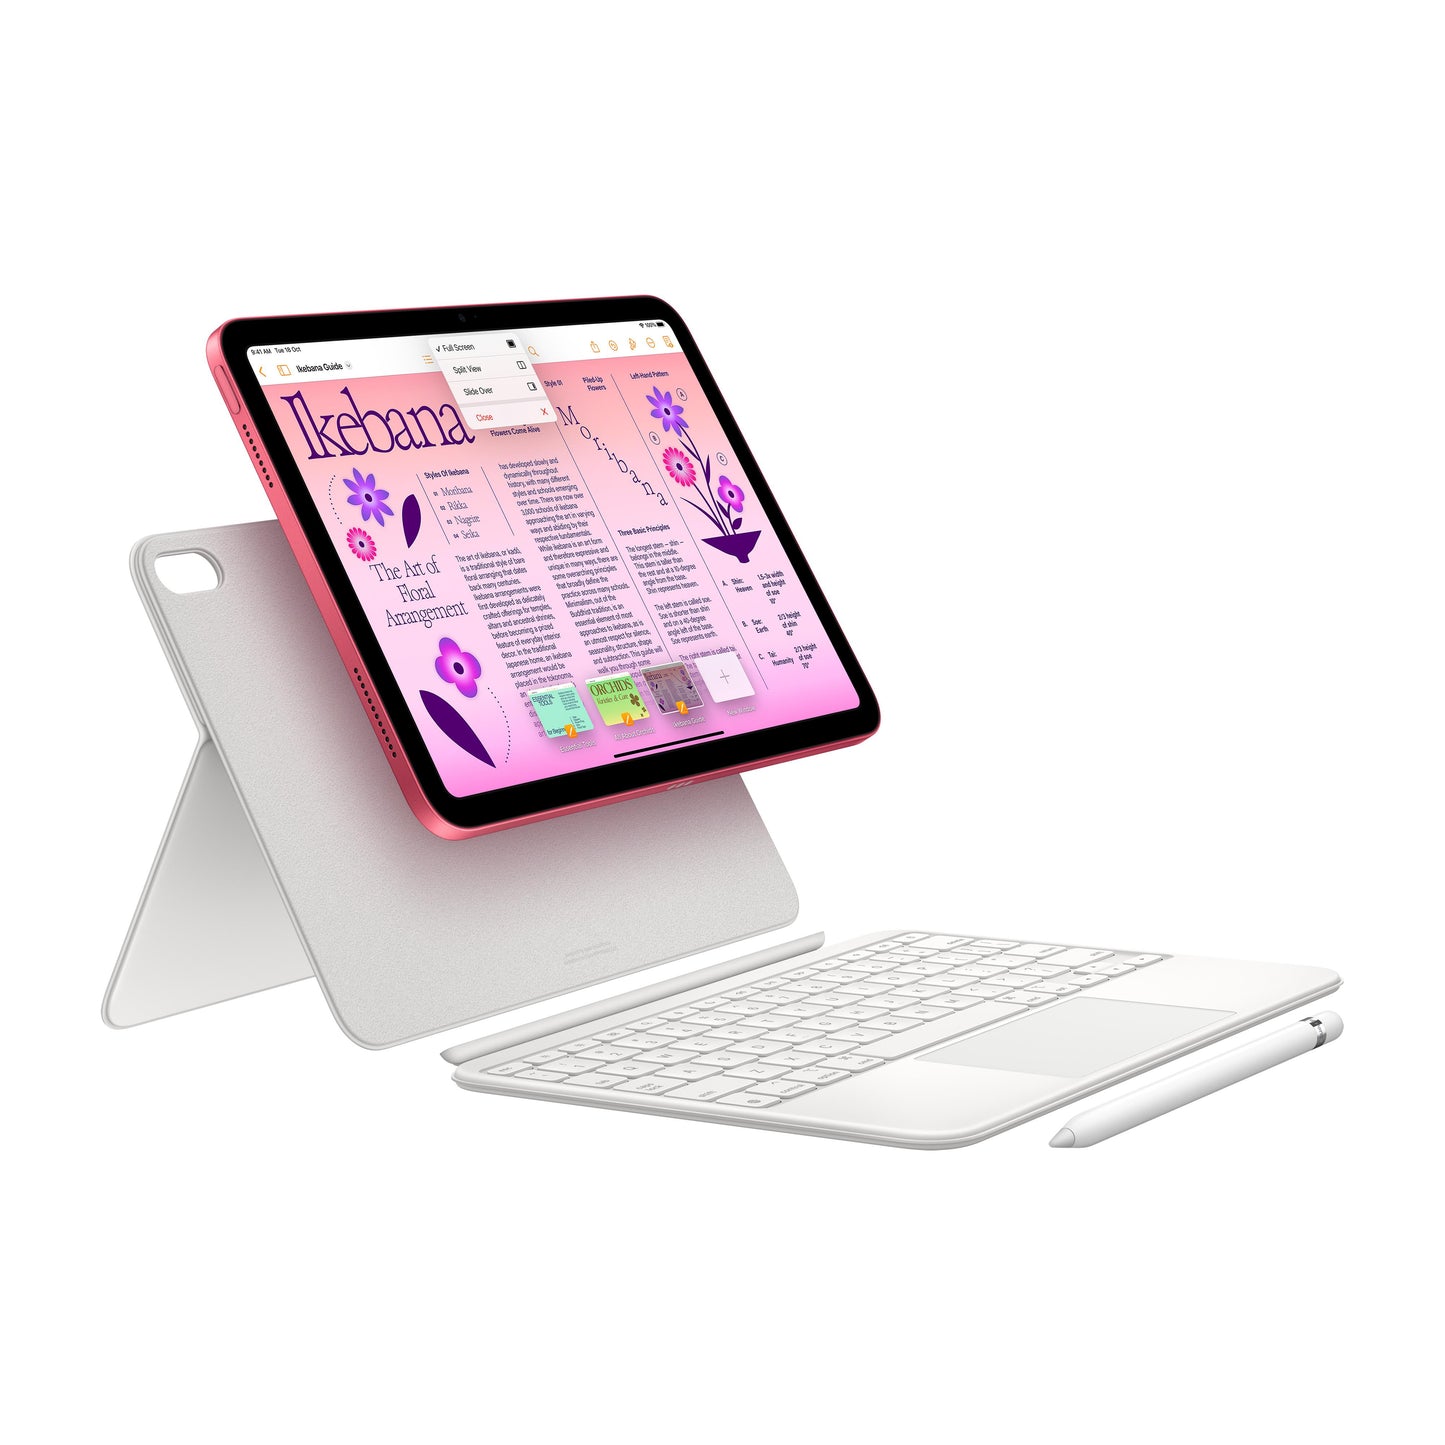 10.9-inch iPad Wi-Fi 64GB - Pink (10th generation)